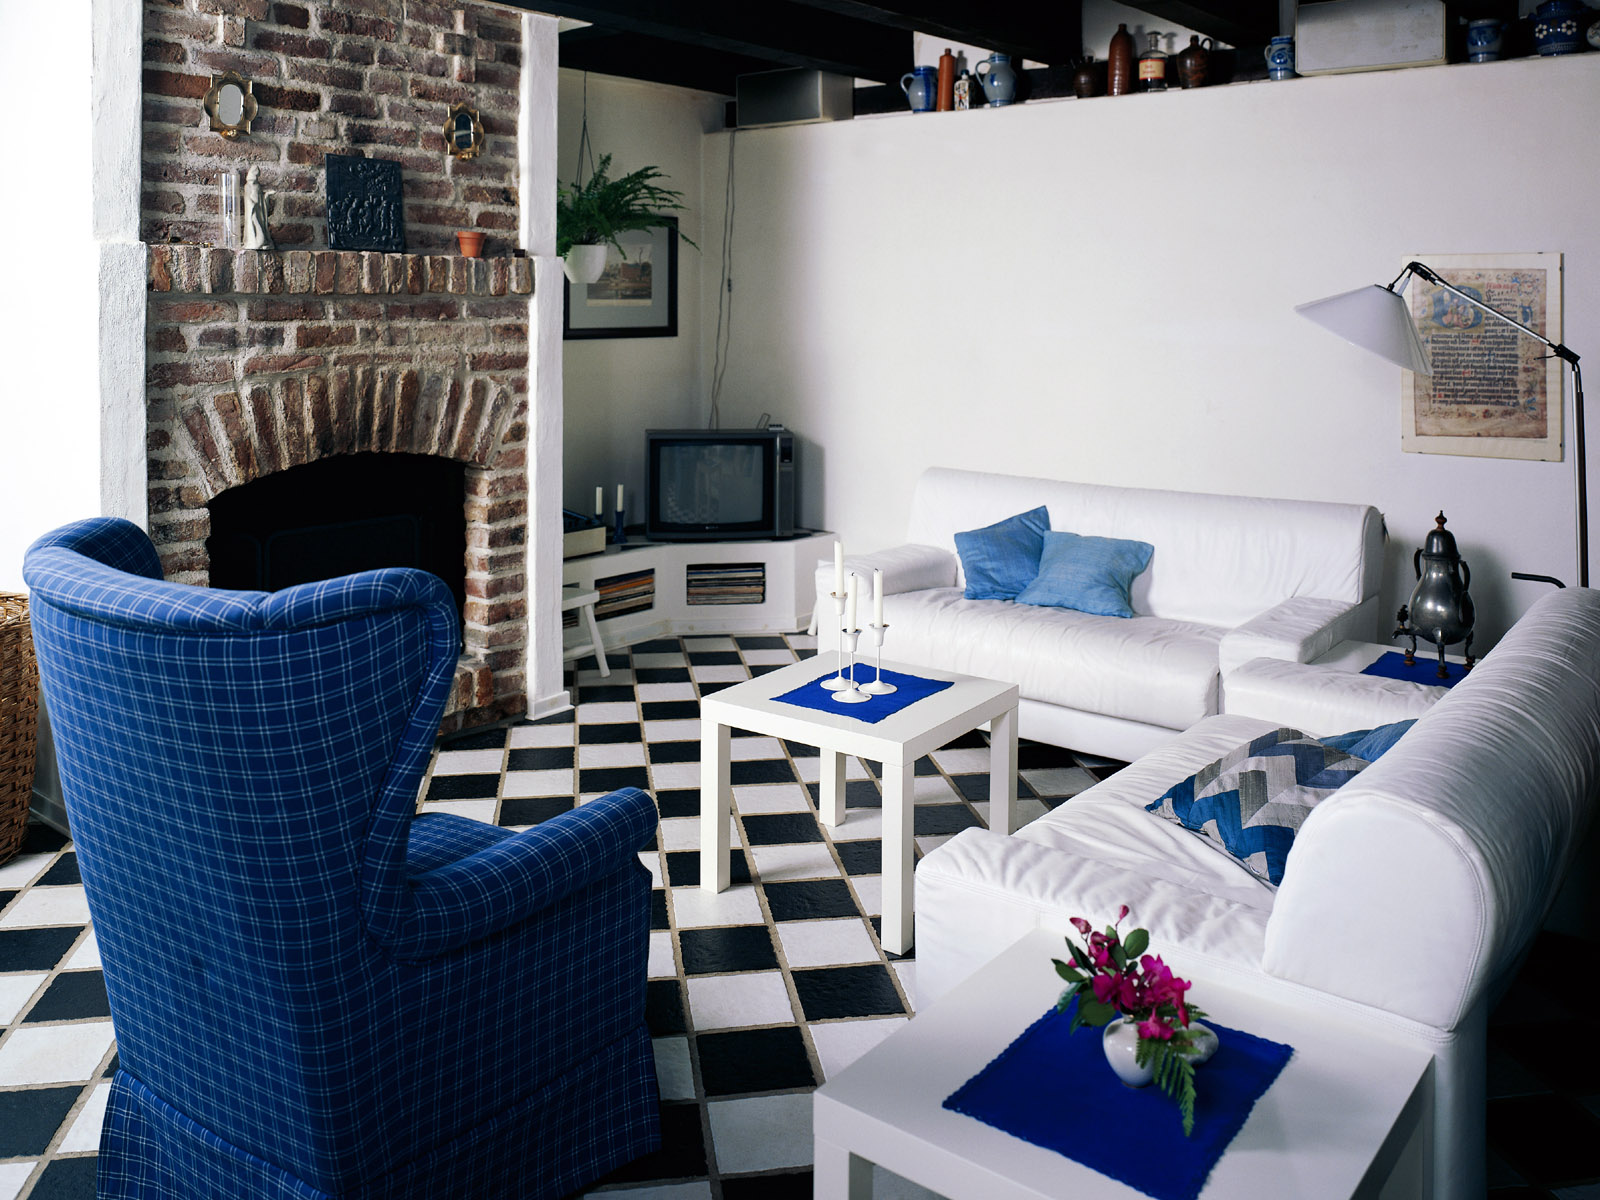 Living Room Interior Design Ideas For Apartment